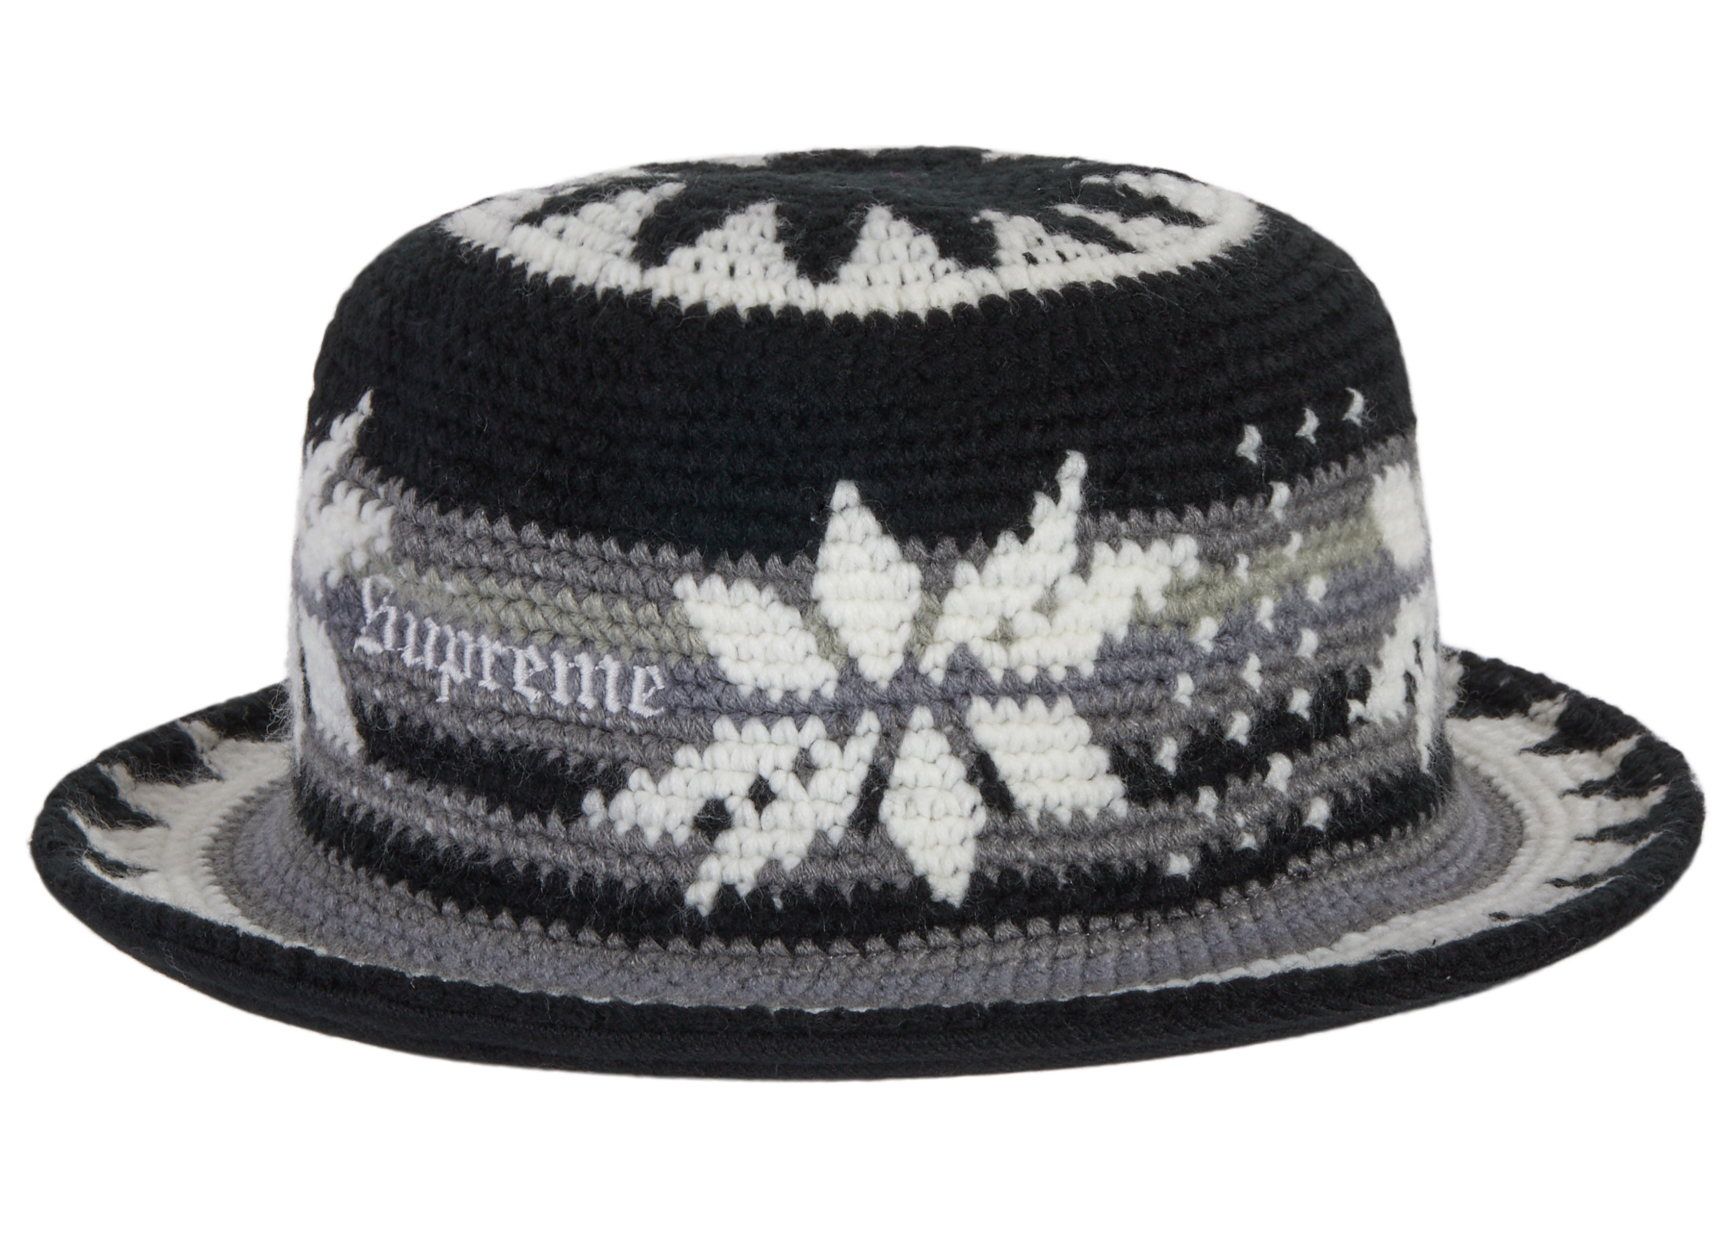 Supreme Snowflake Crochet Crusher Black